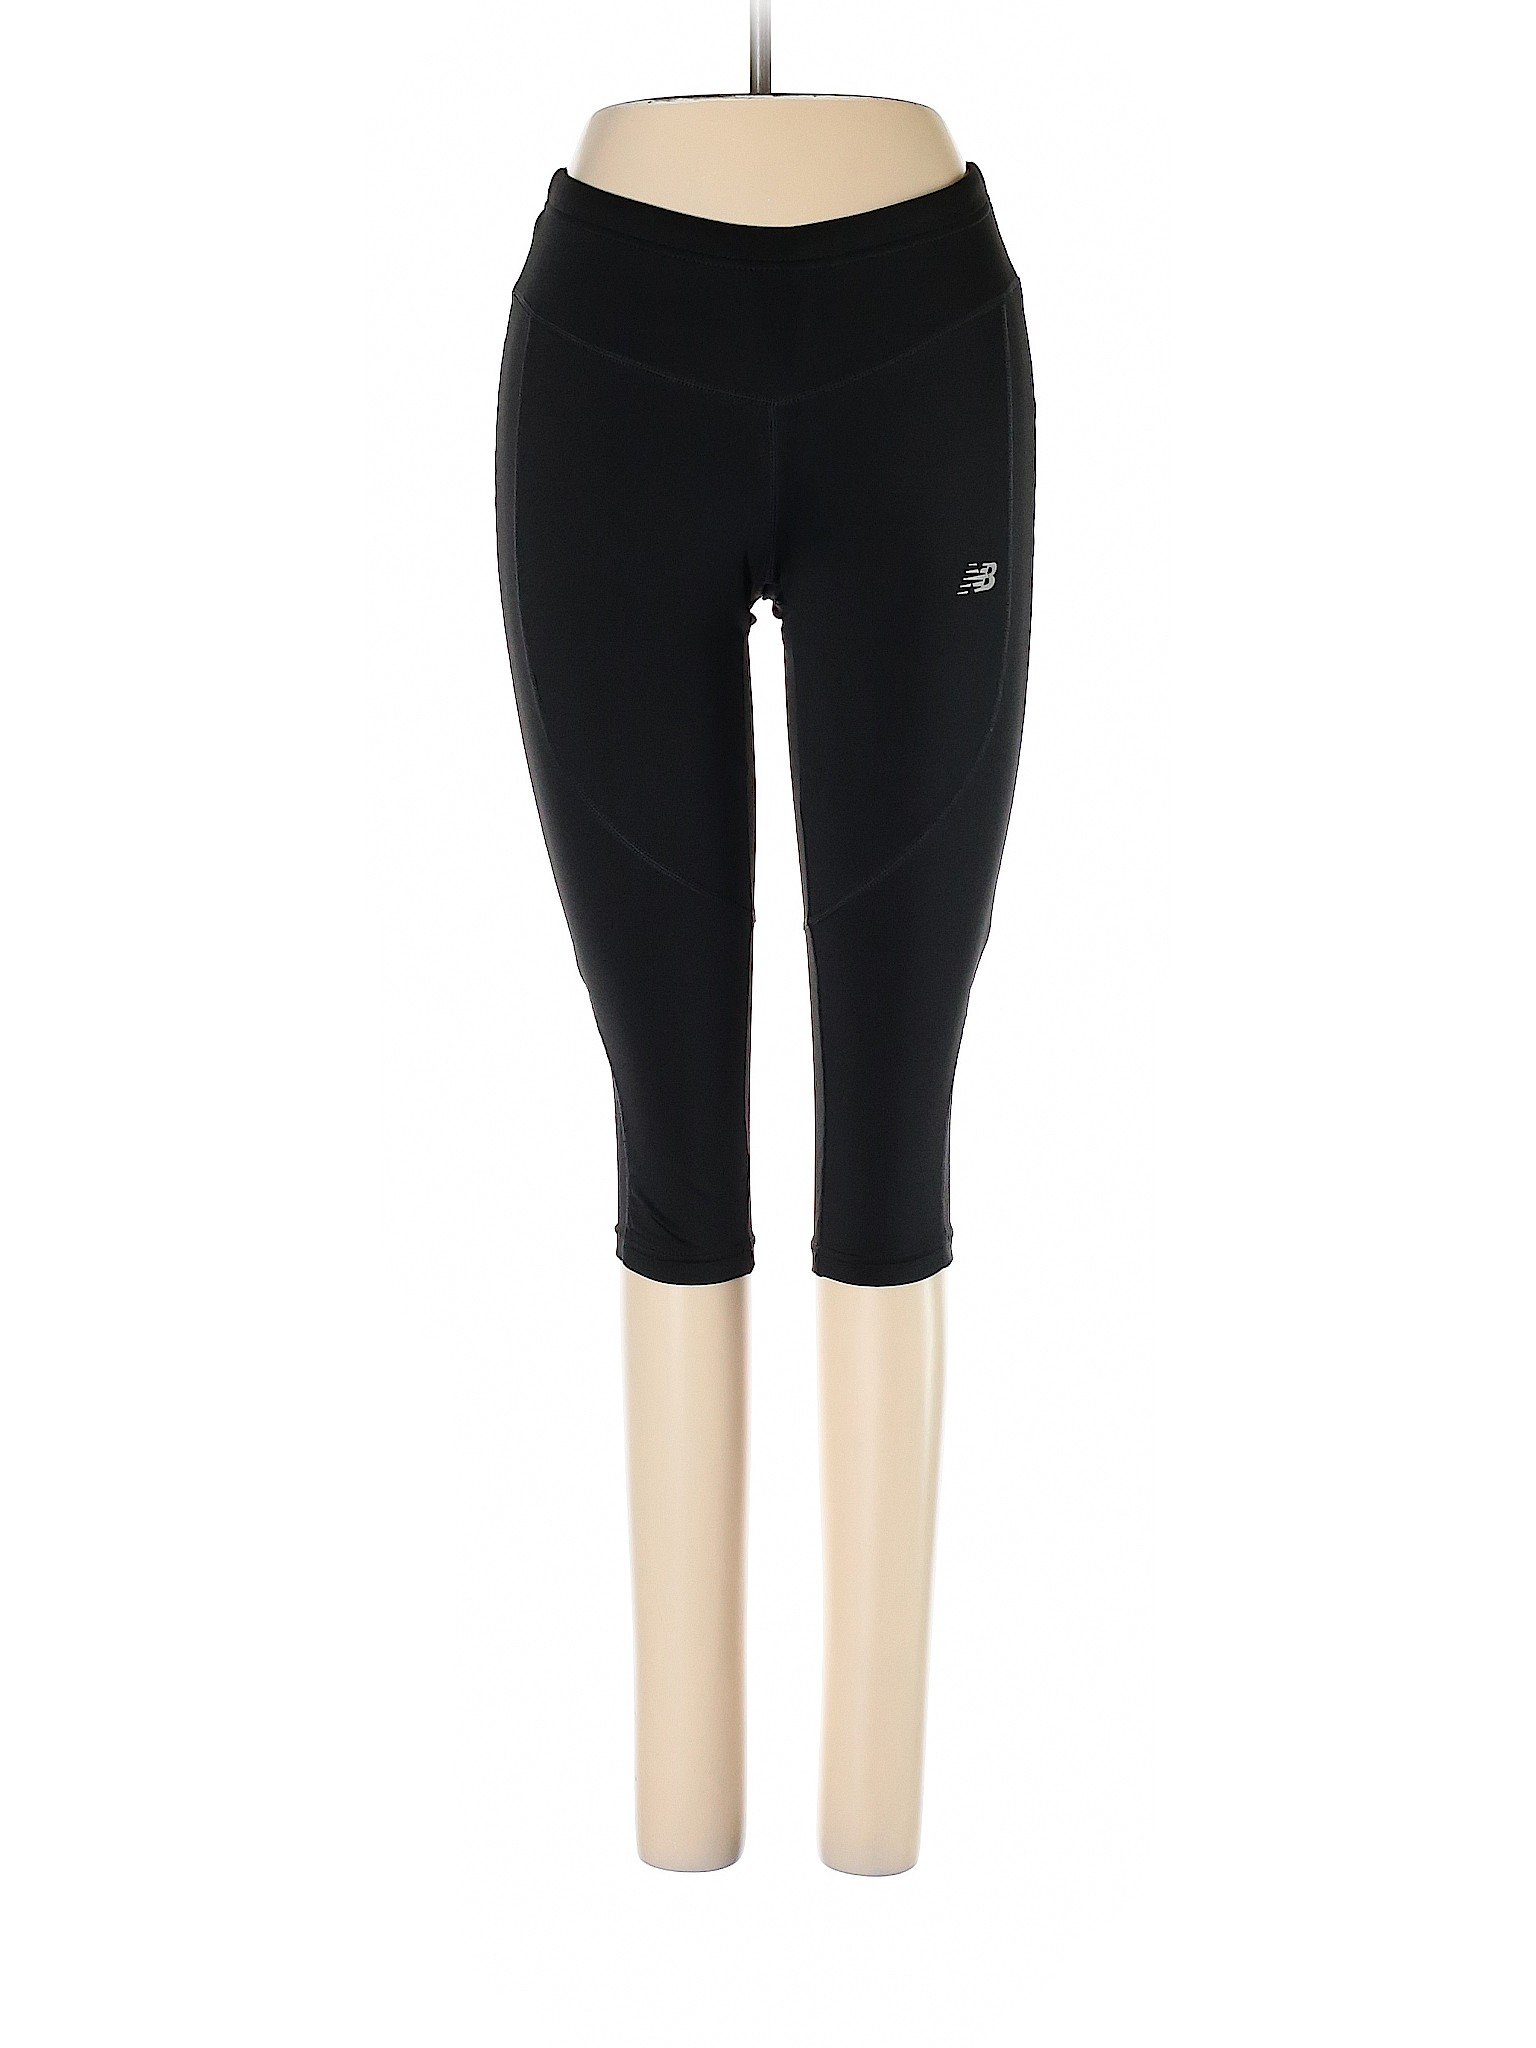 New Balance Women Black Active Pants S | eBay